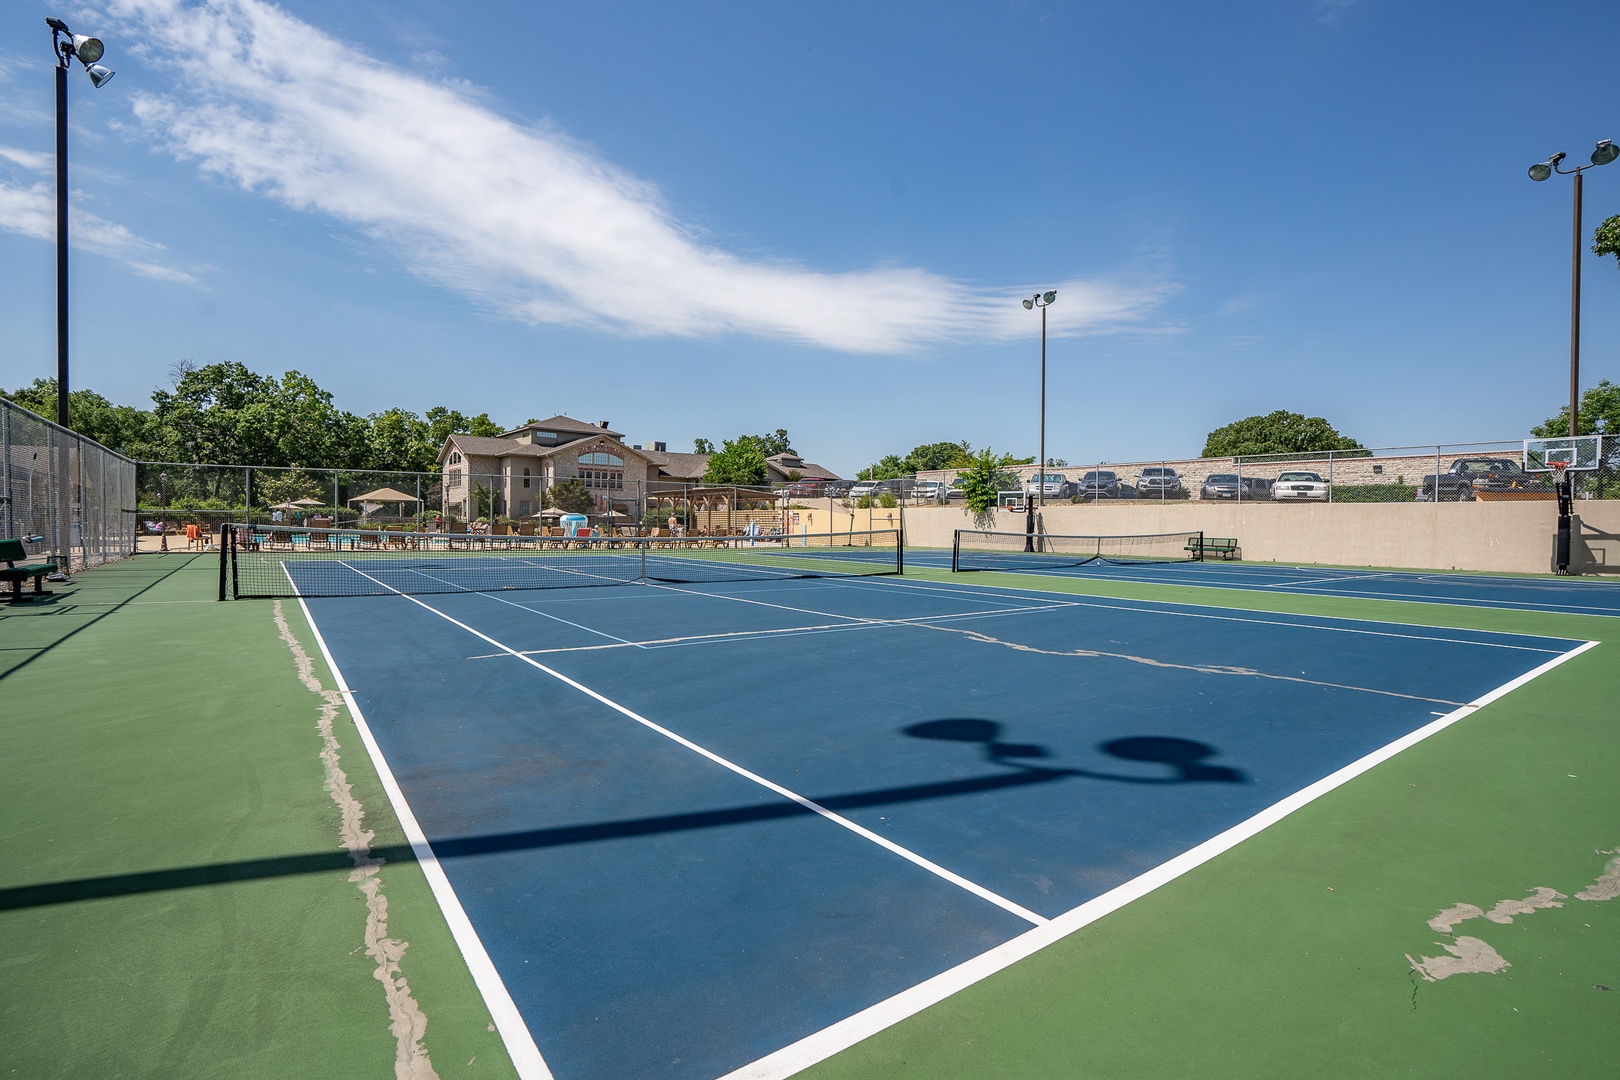 Tennis, Pickleball, & Basketball Courts